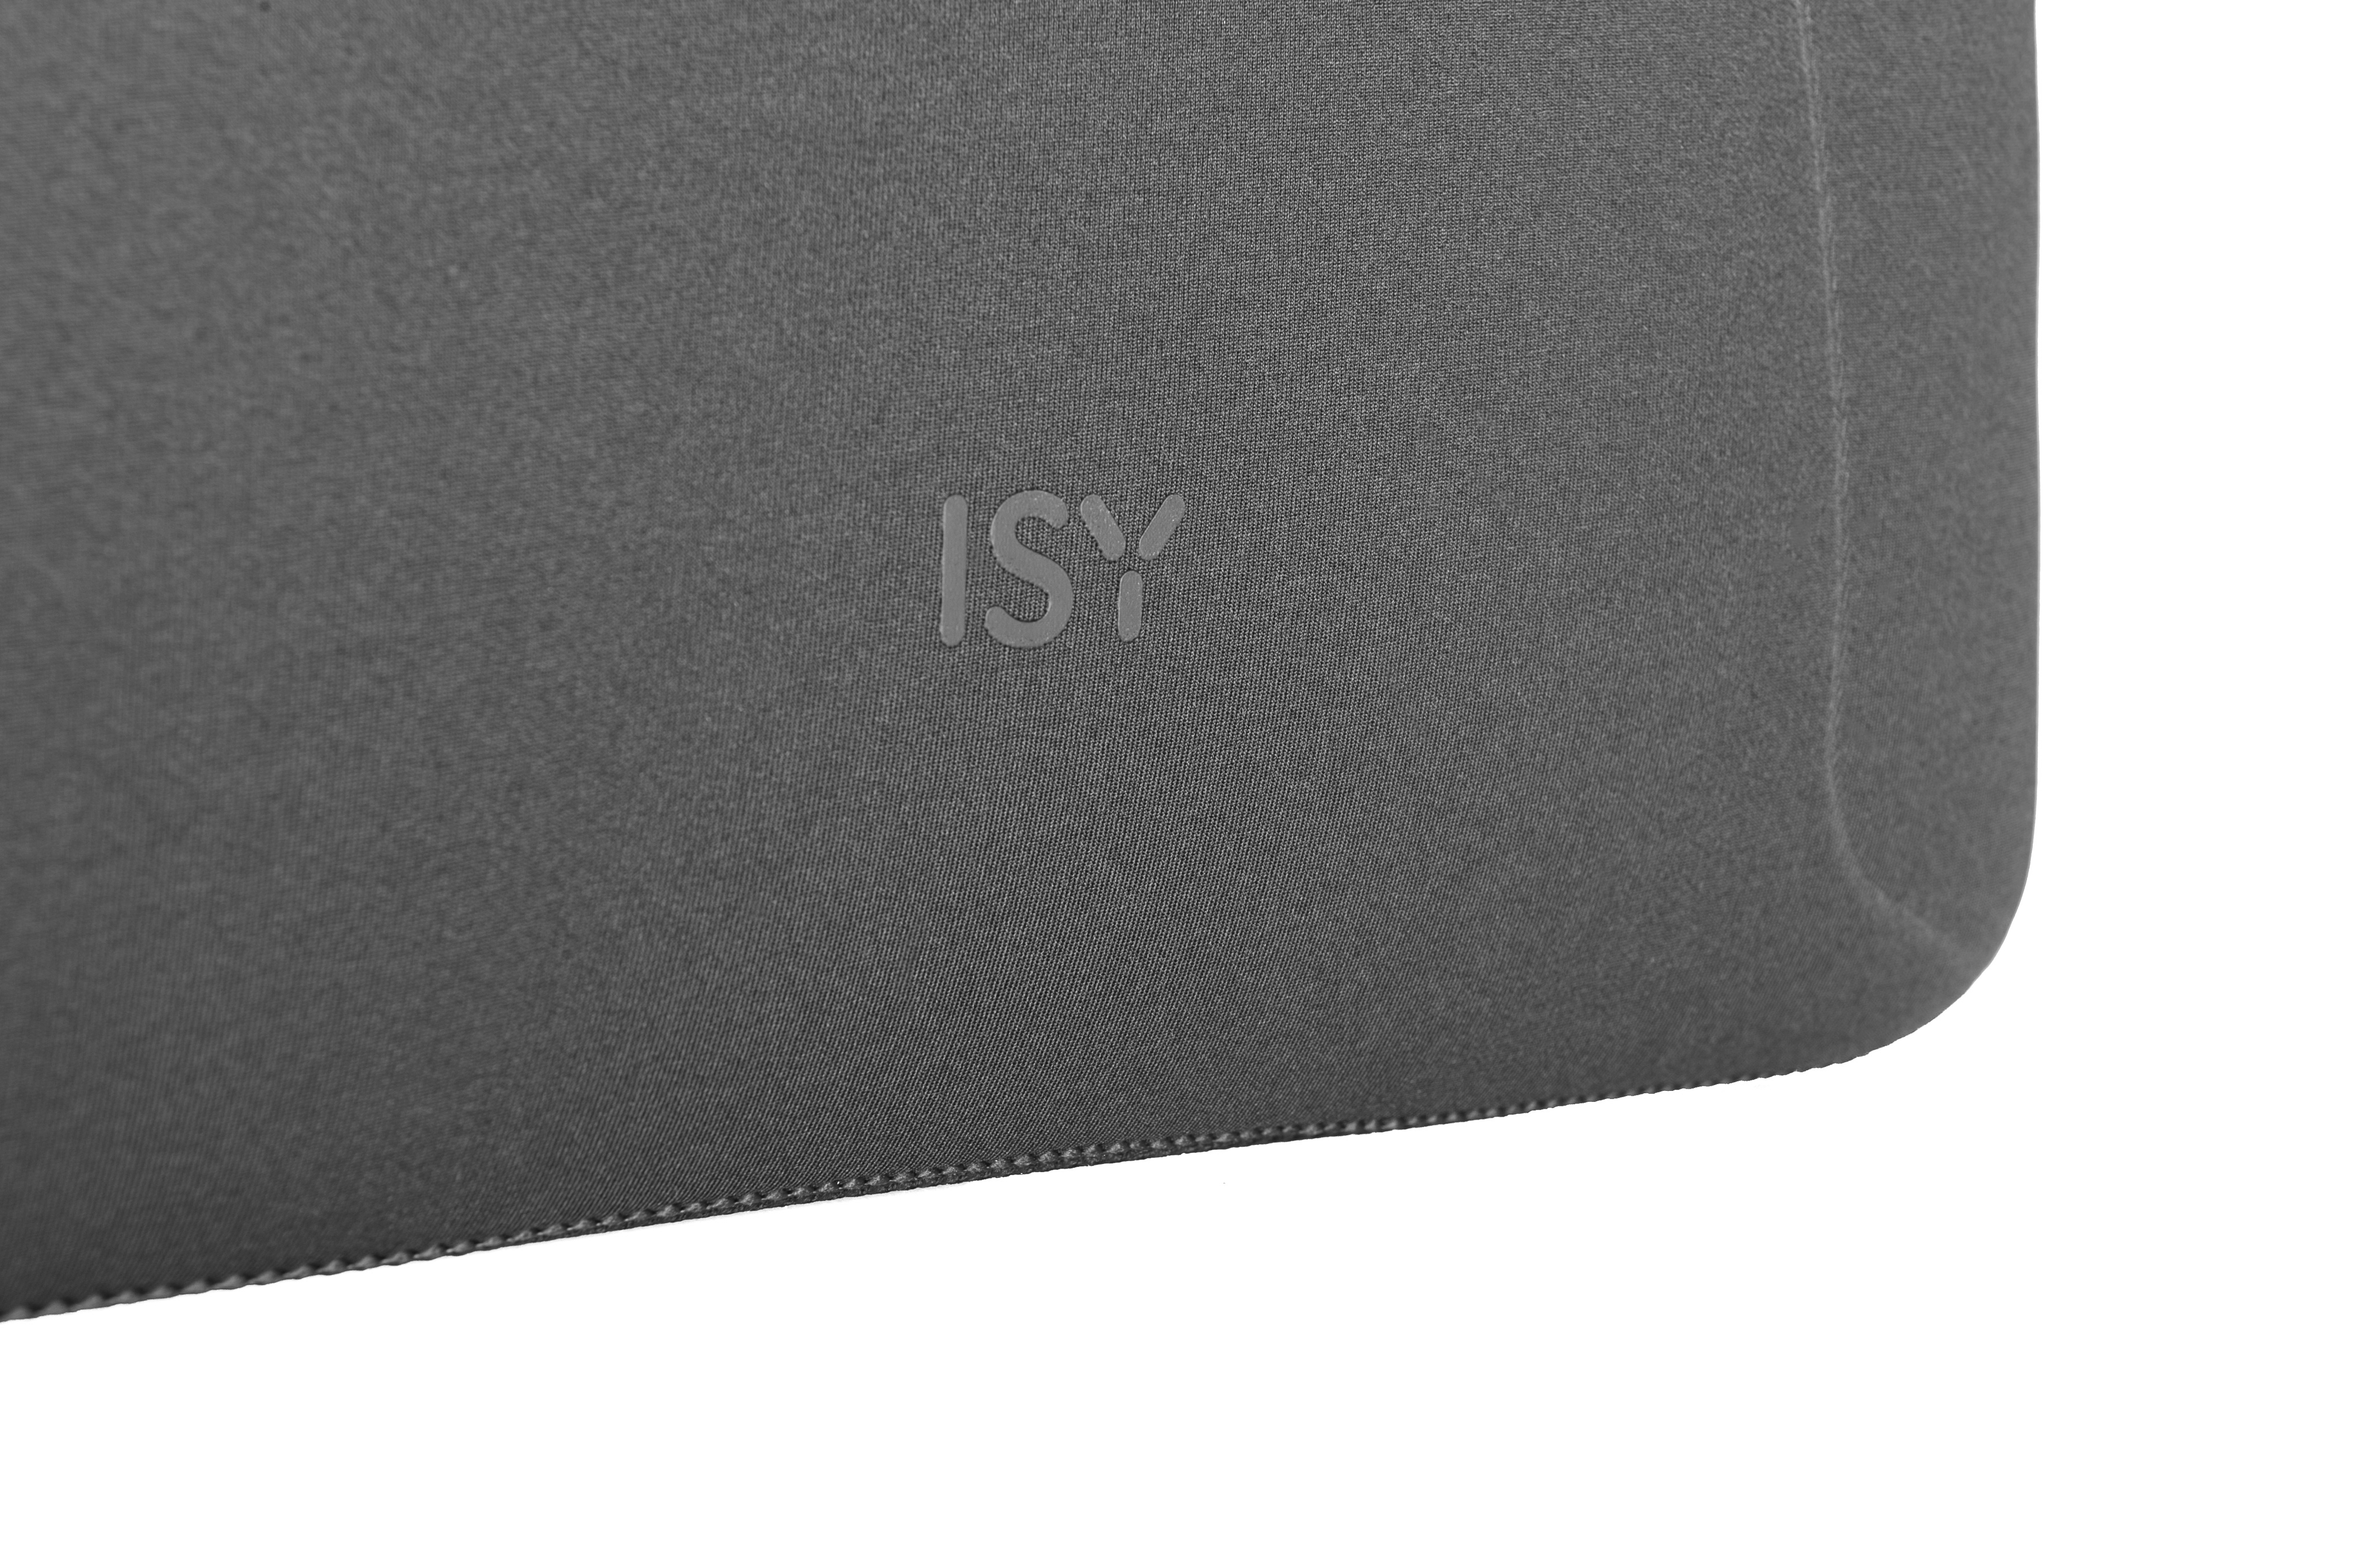 ISY INB-1113 Notebookhülle Sleeve für Universal Polyester, Grau